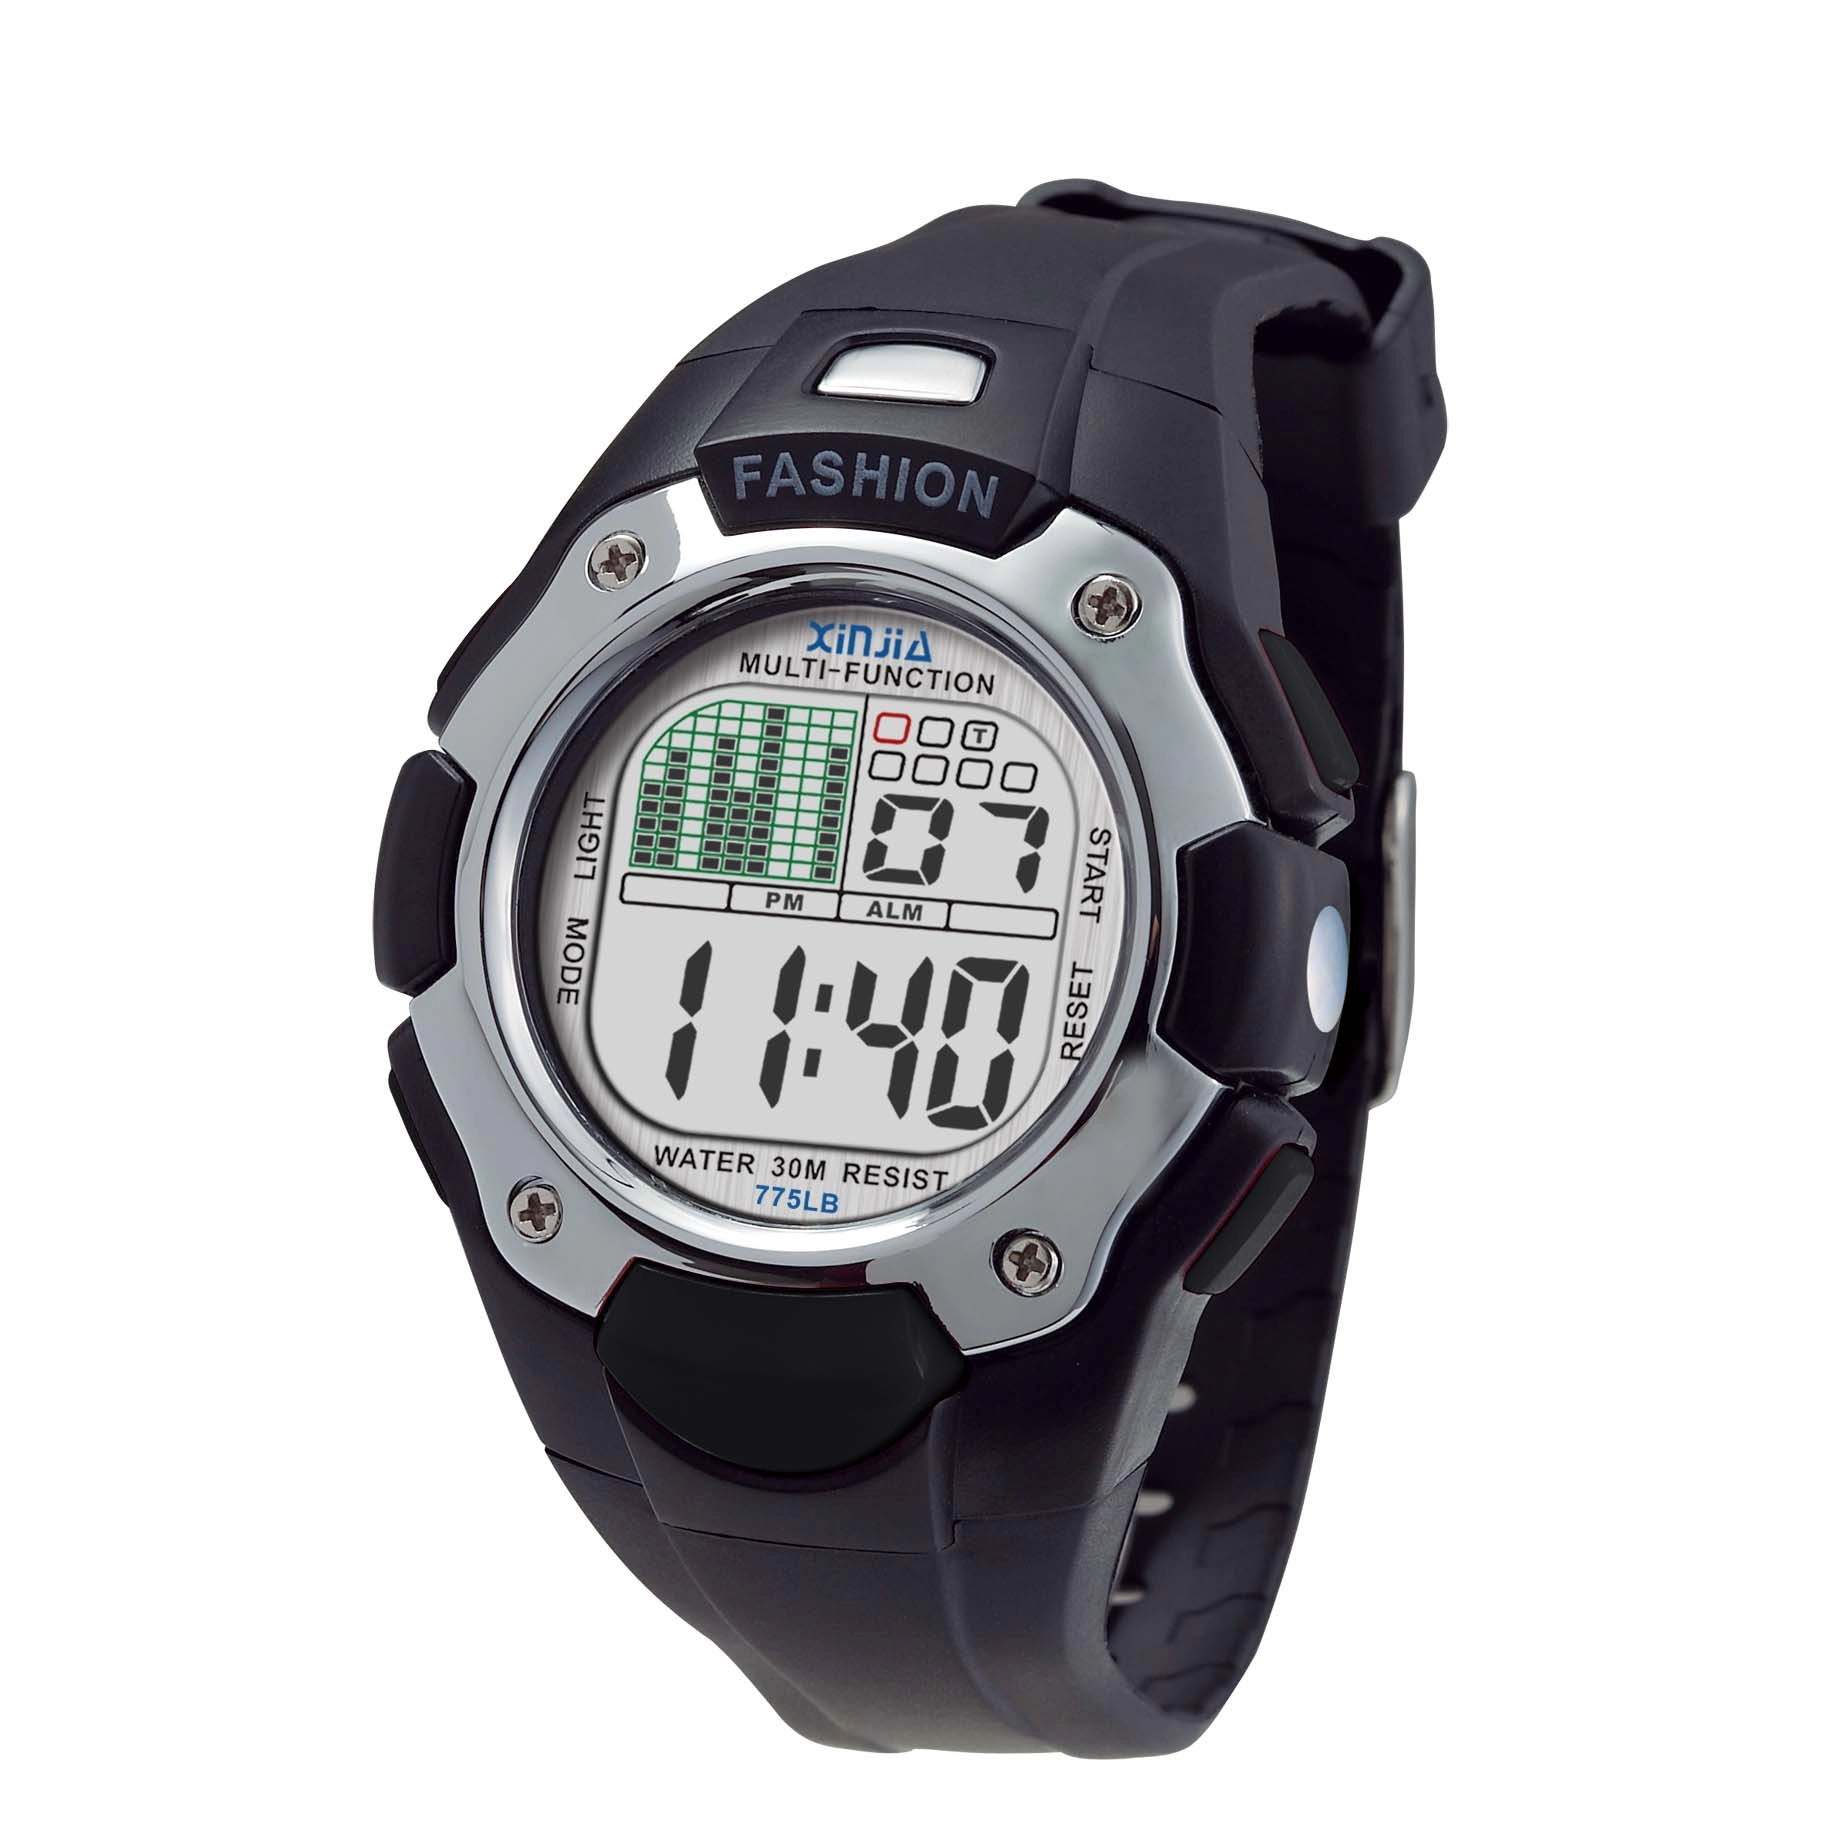 Fashione Flashing Light Water Resistant Sport Wrist Watch